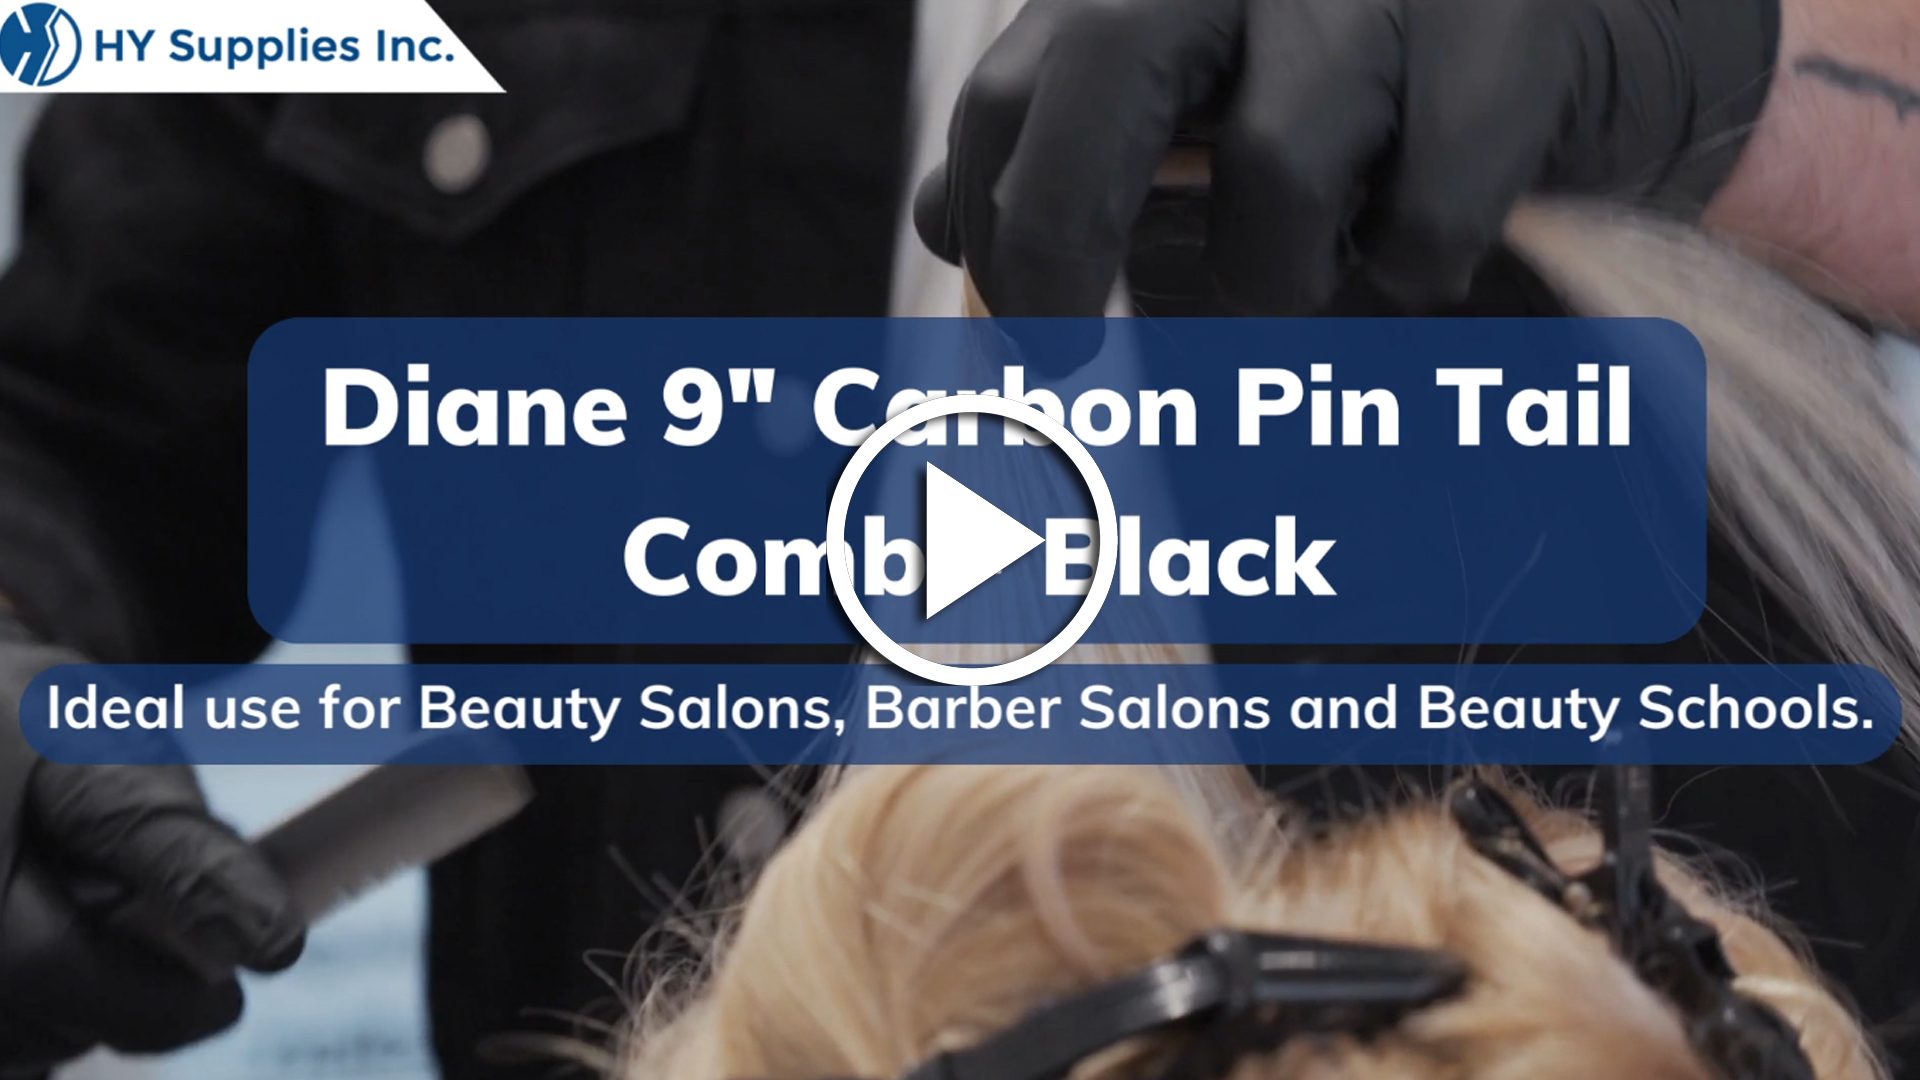 Diane 9" Carbon Pin Tail Comb - Black